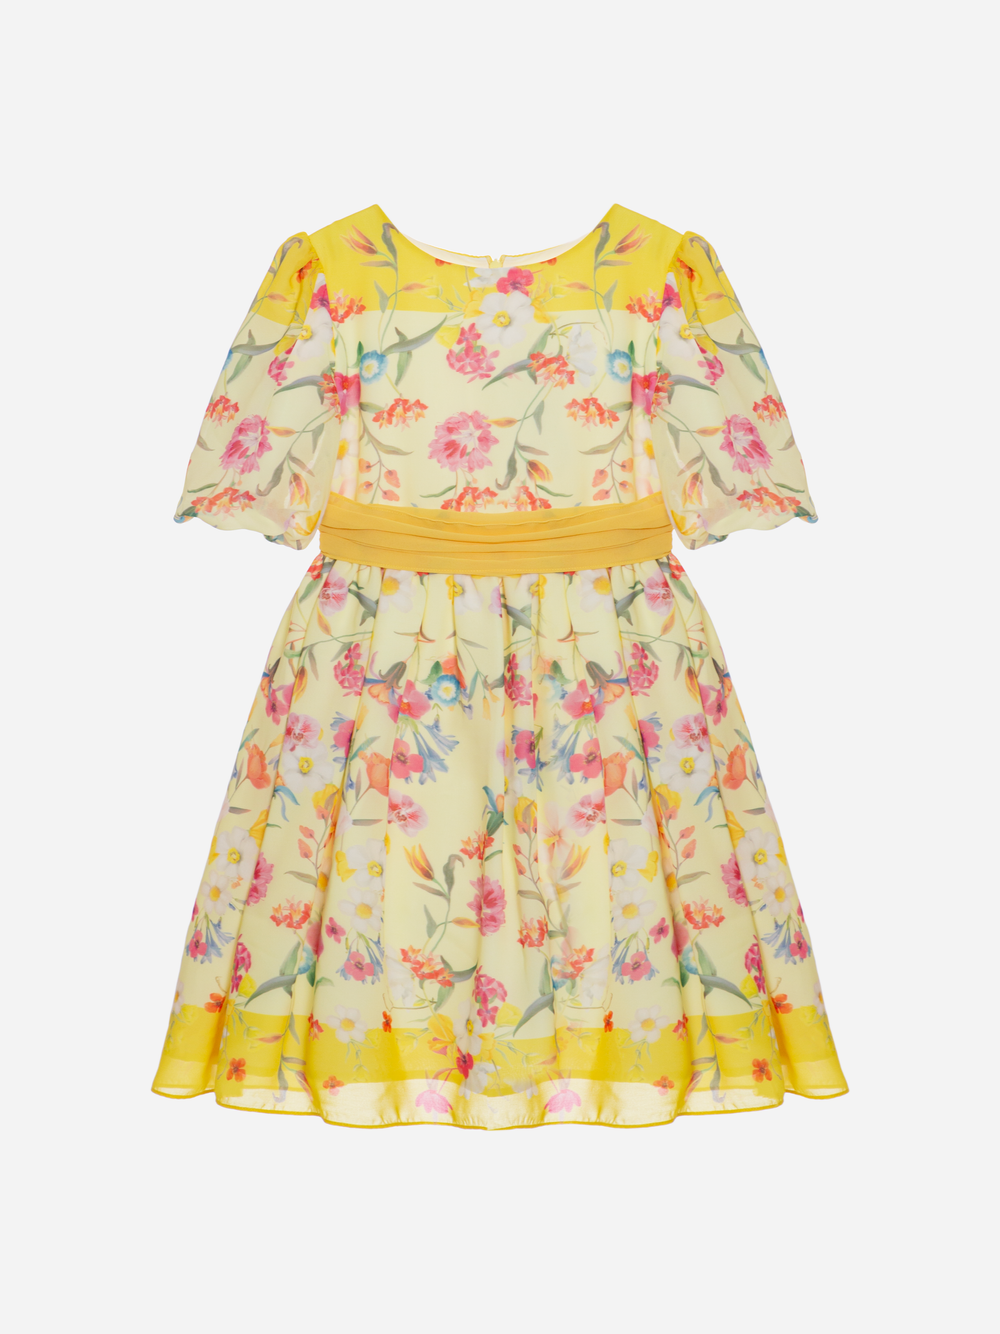 Yellow floral print dress